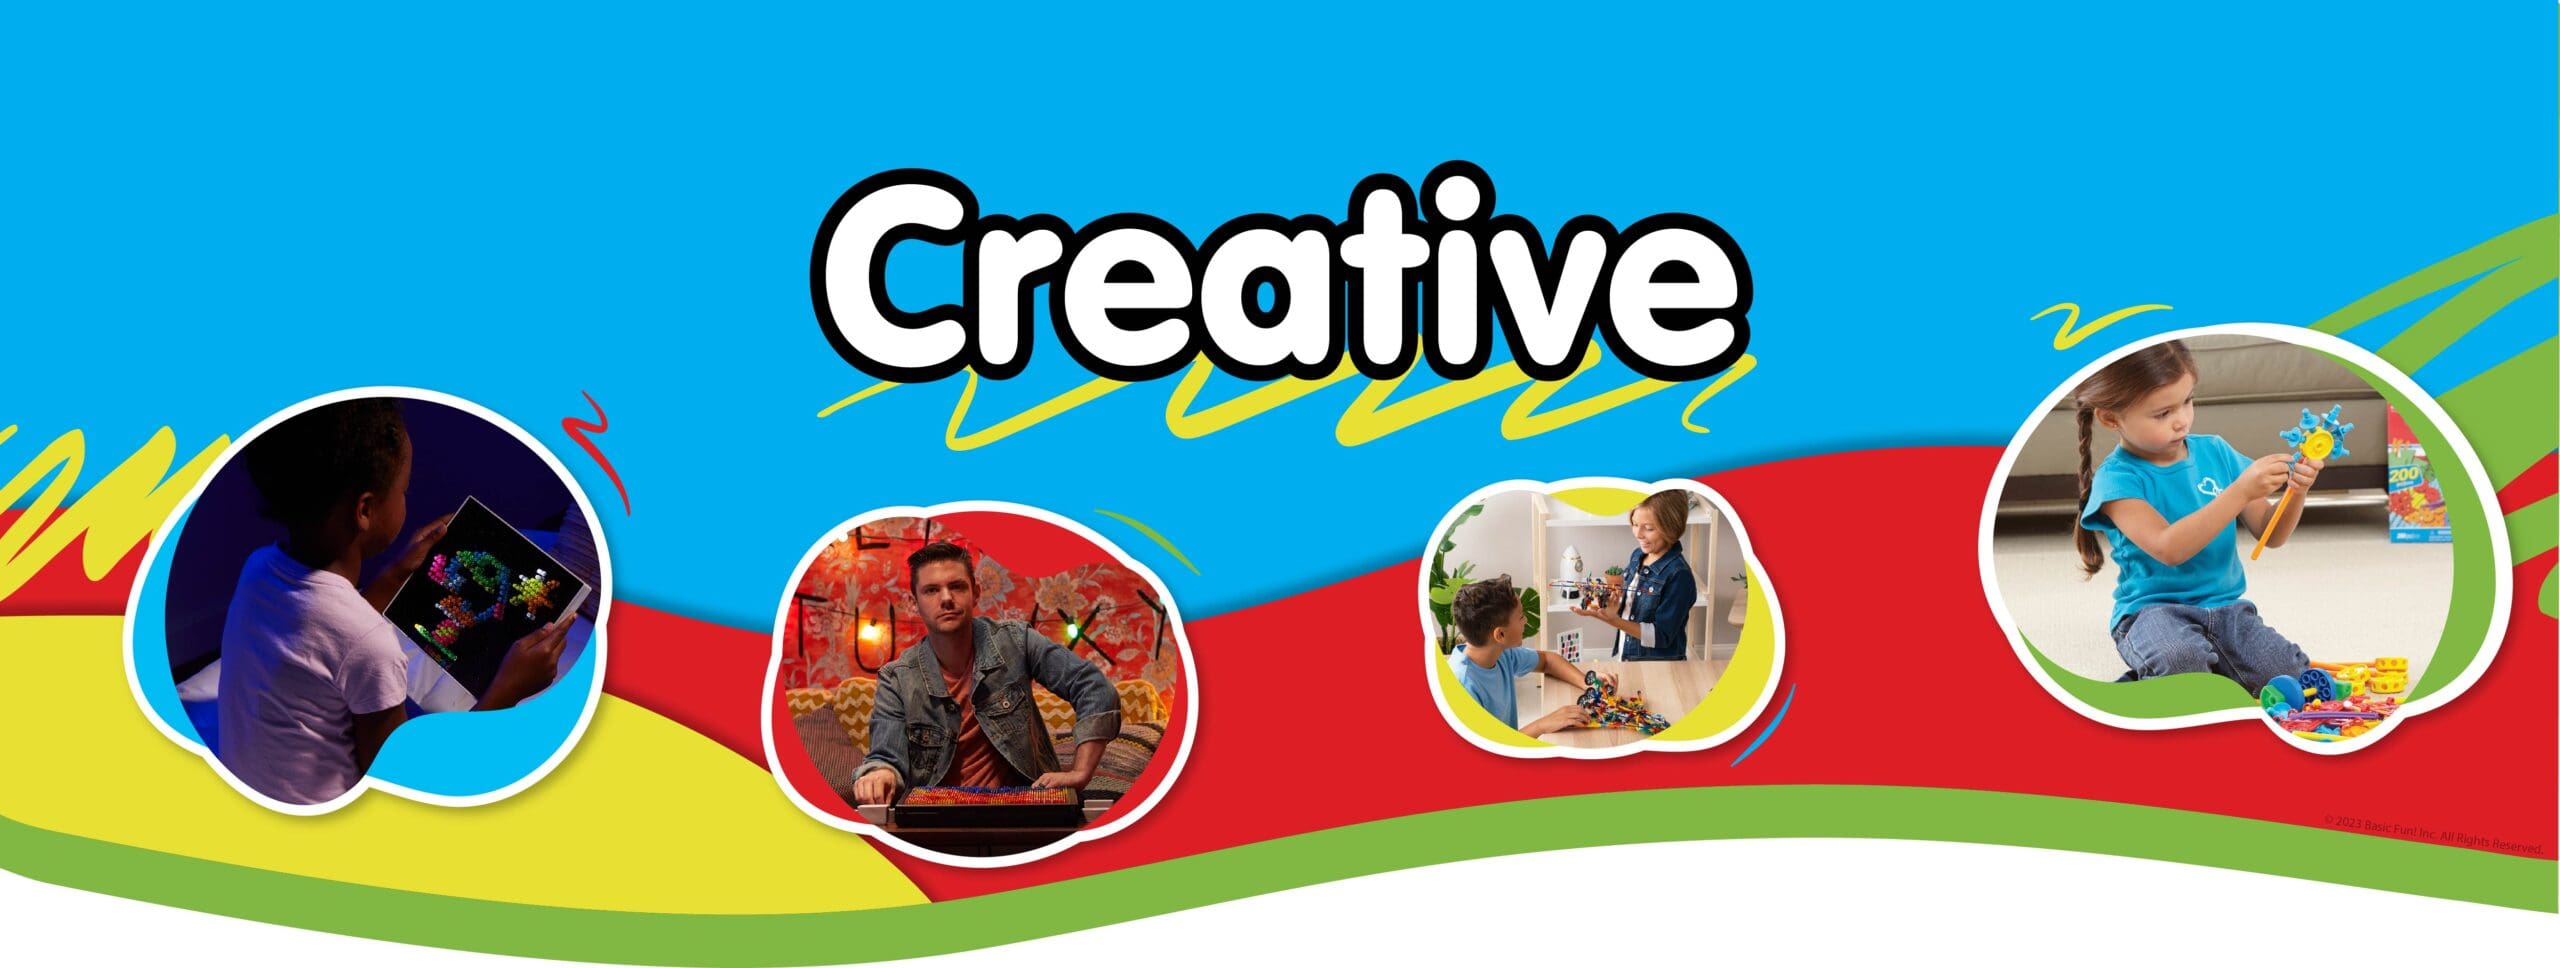 Creative banner